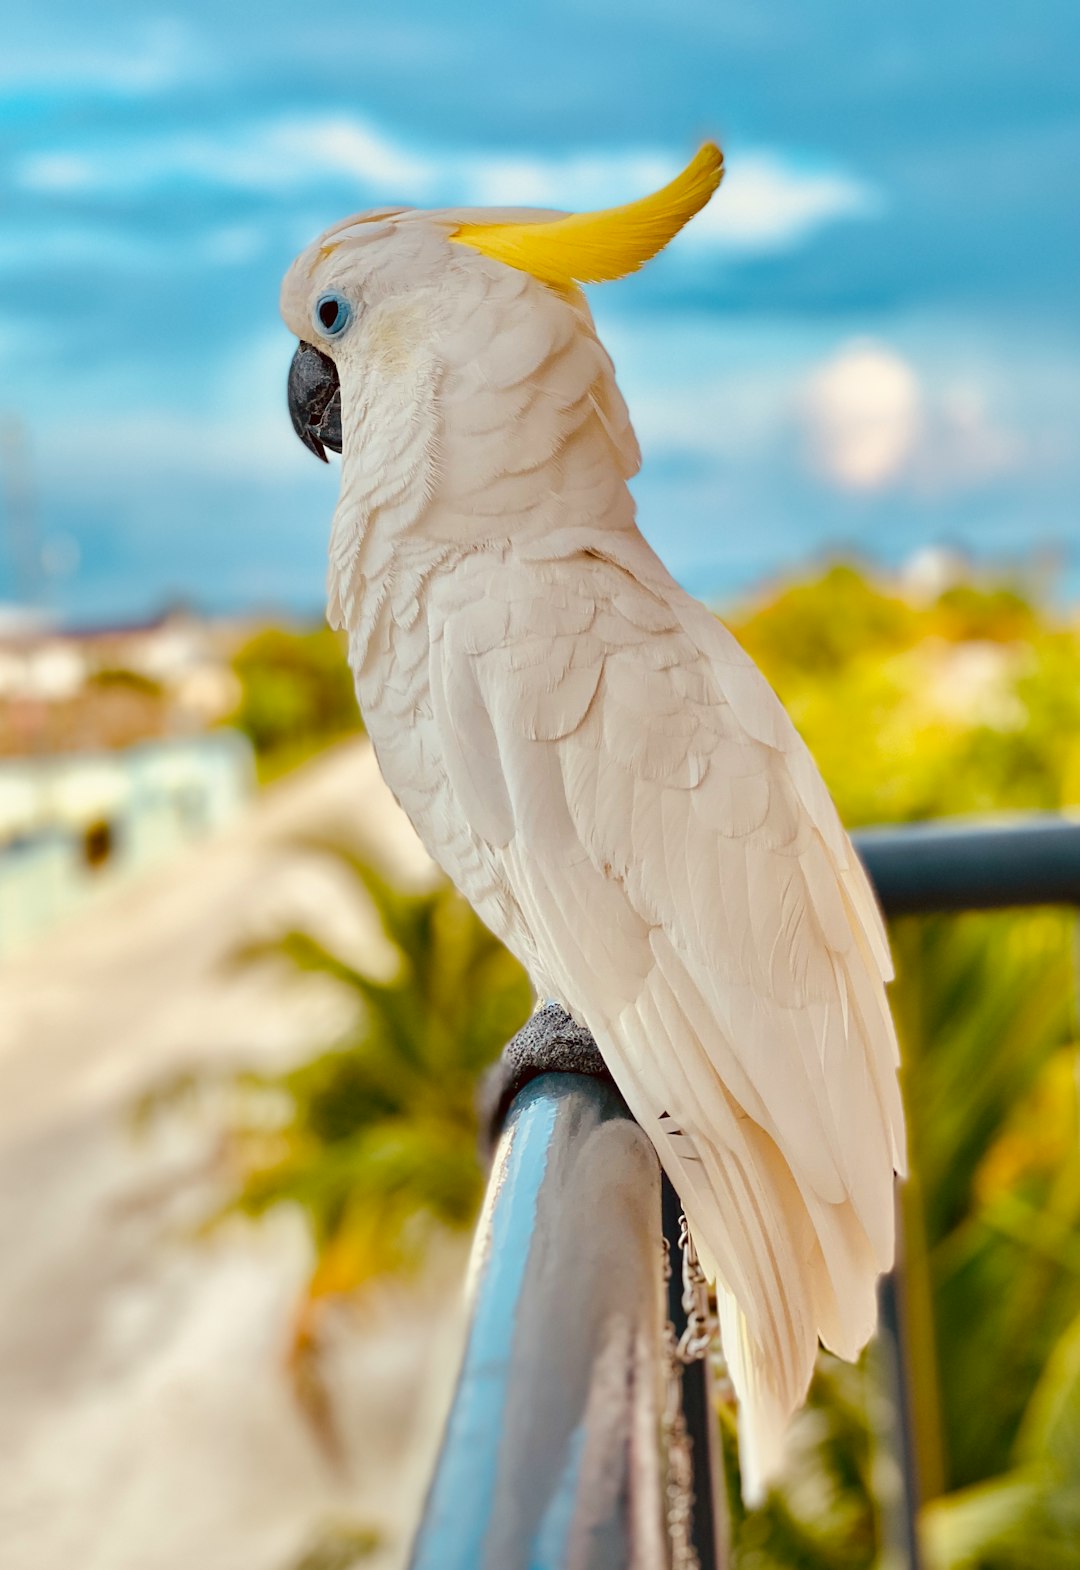  white and yellow bird on black metal bar during daytime parrot